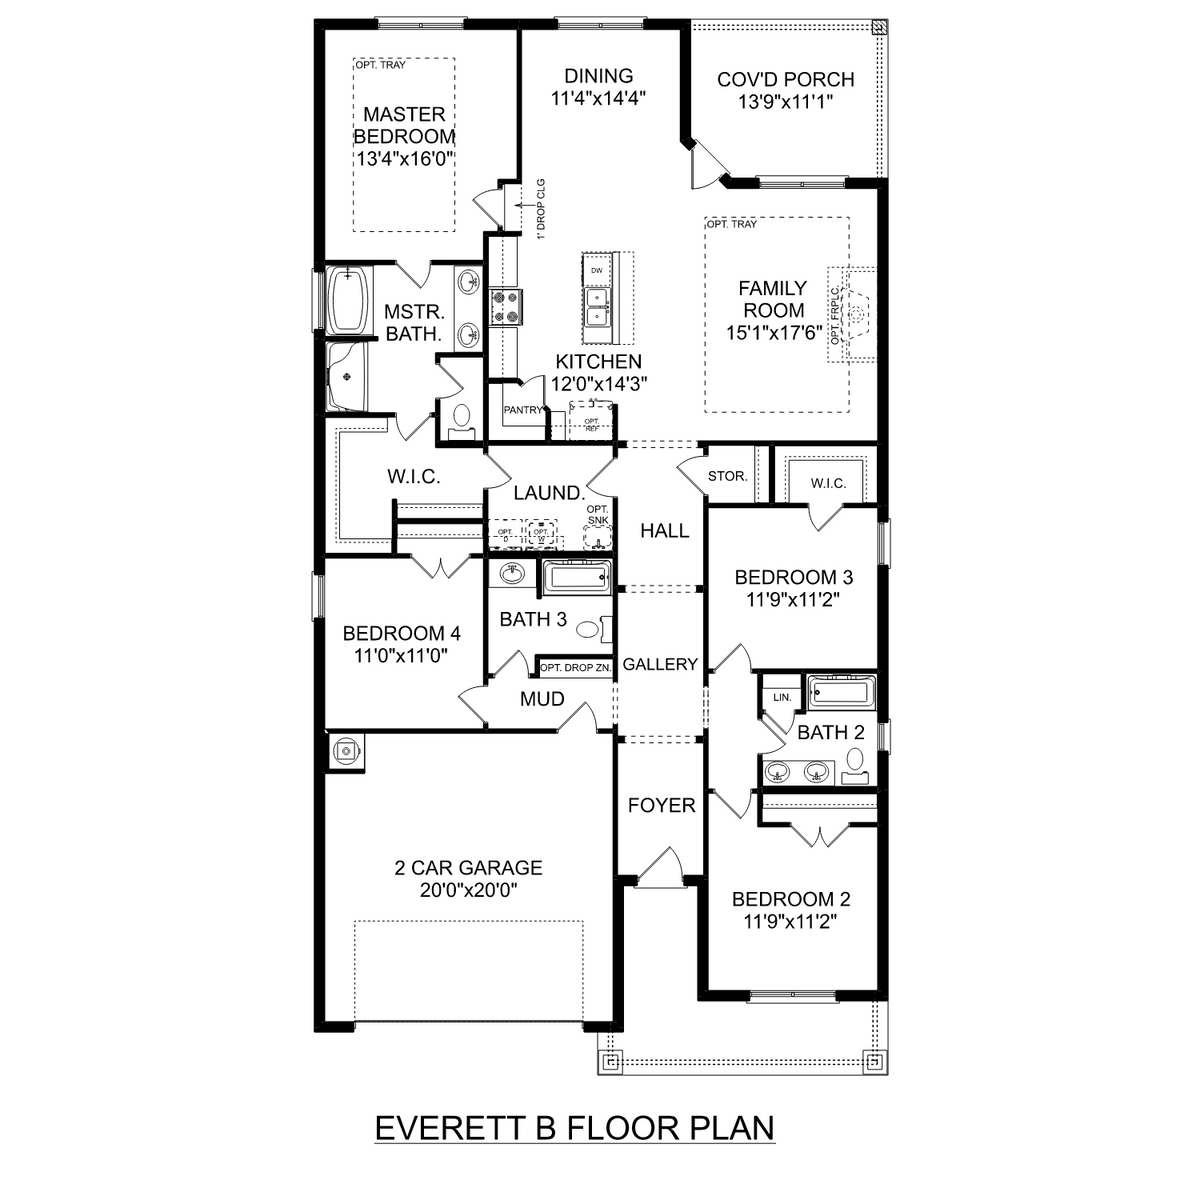 1 - The Everett B floor plan layout for 204 Joan Circle in Davidson Homes' Little Burwell Estates community.